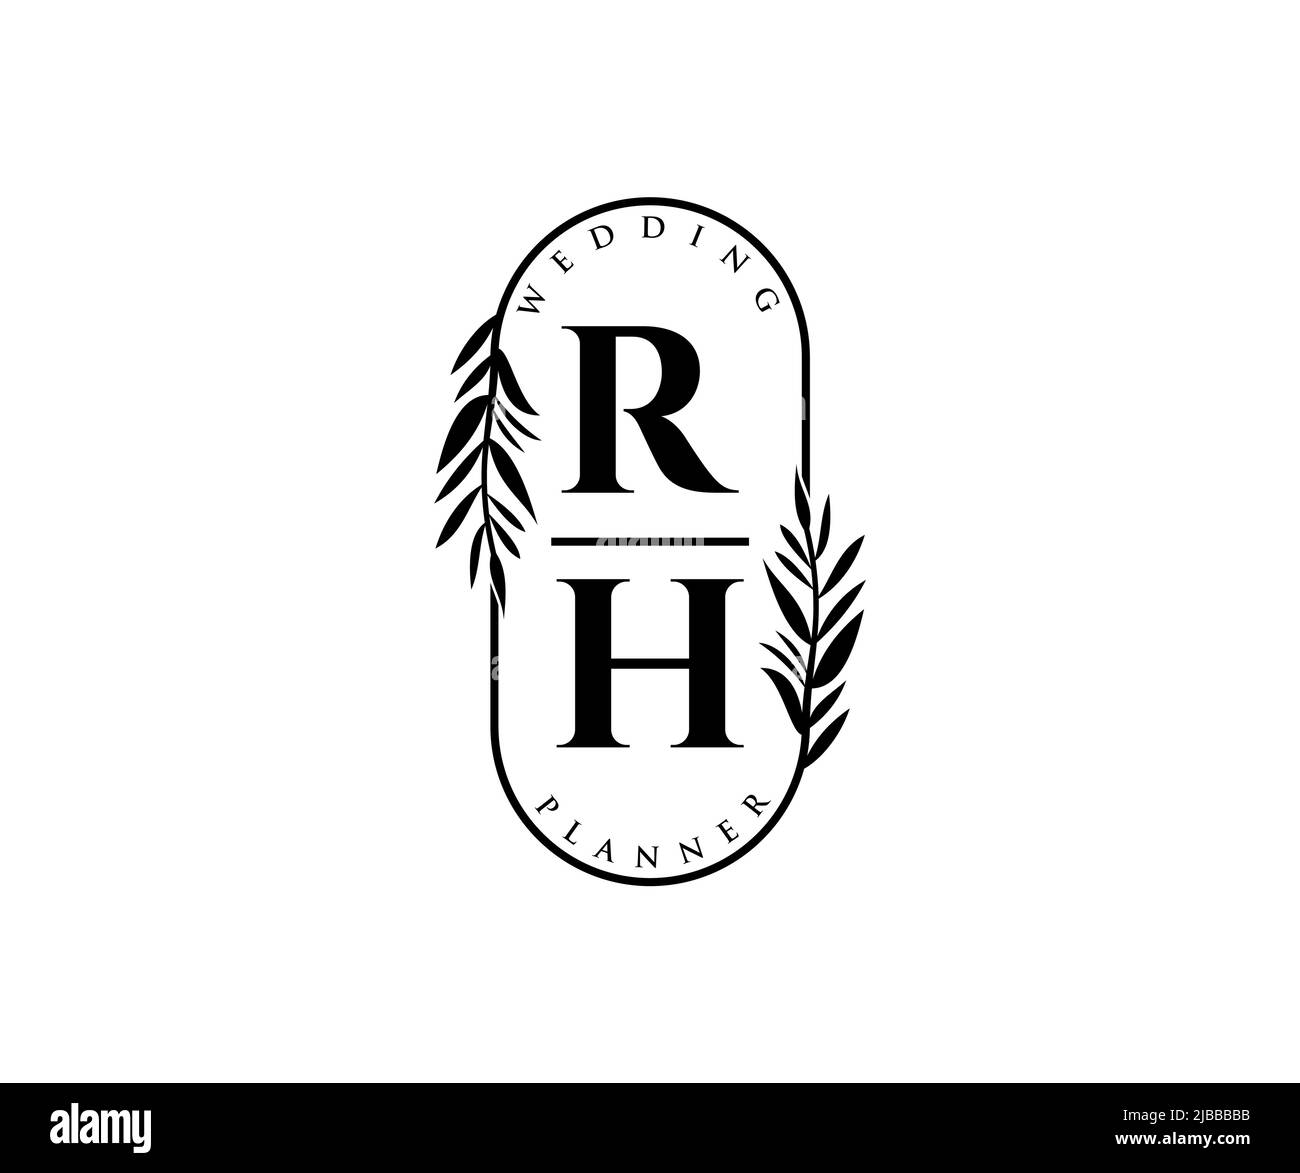 Rh initials letter wedding monogram logos Vector Image